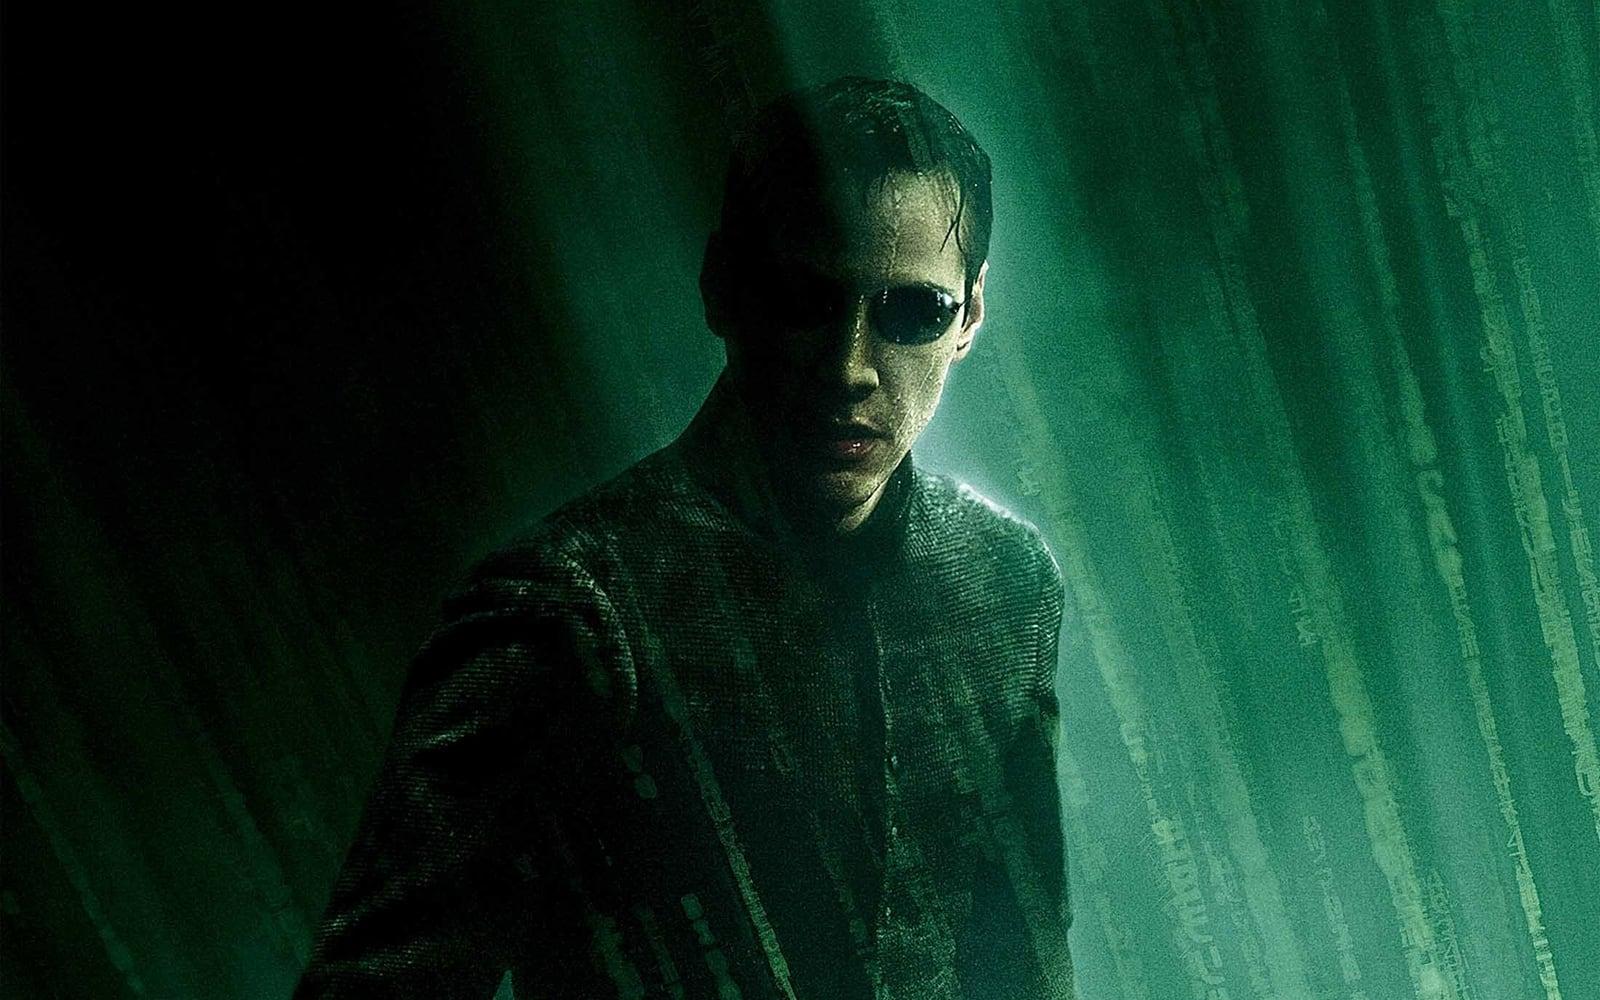 The Matrix: Revolutions